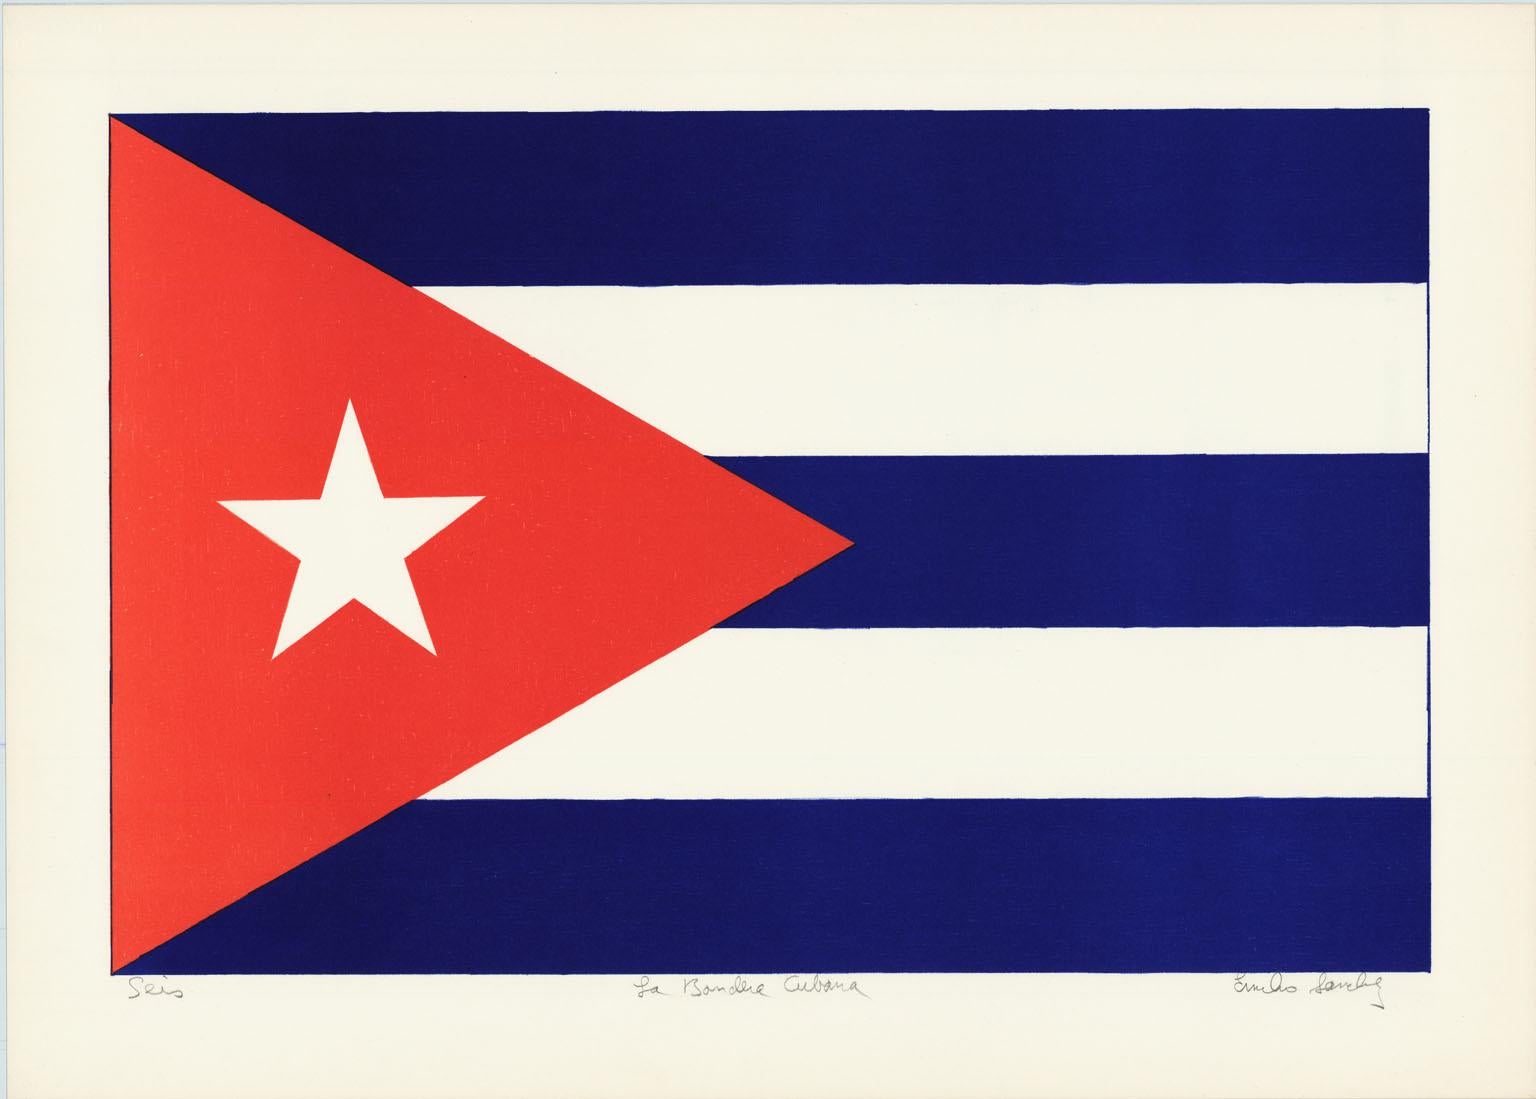 La Bandera Cubana - Print by Emilio Sanchez